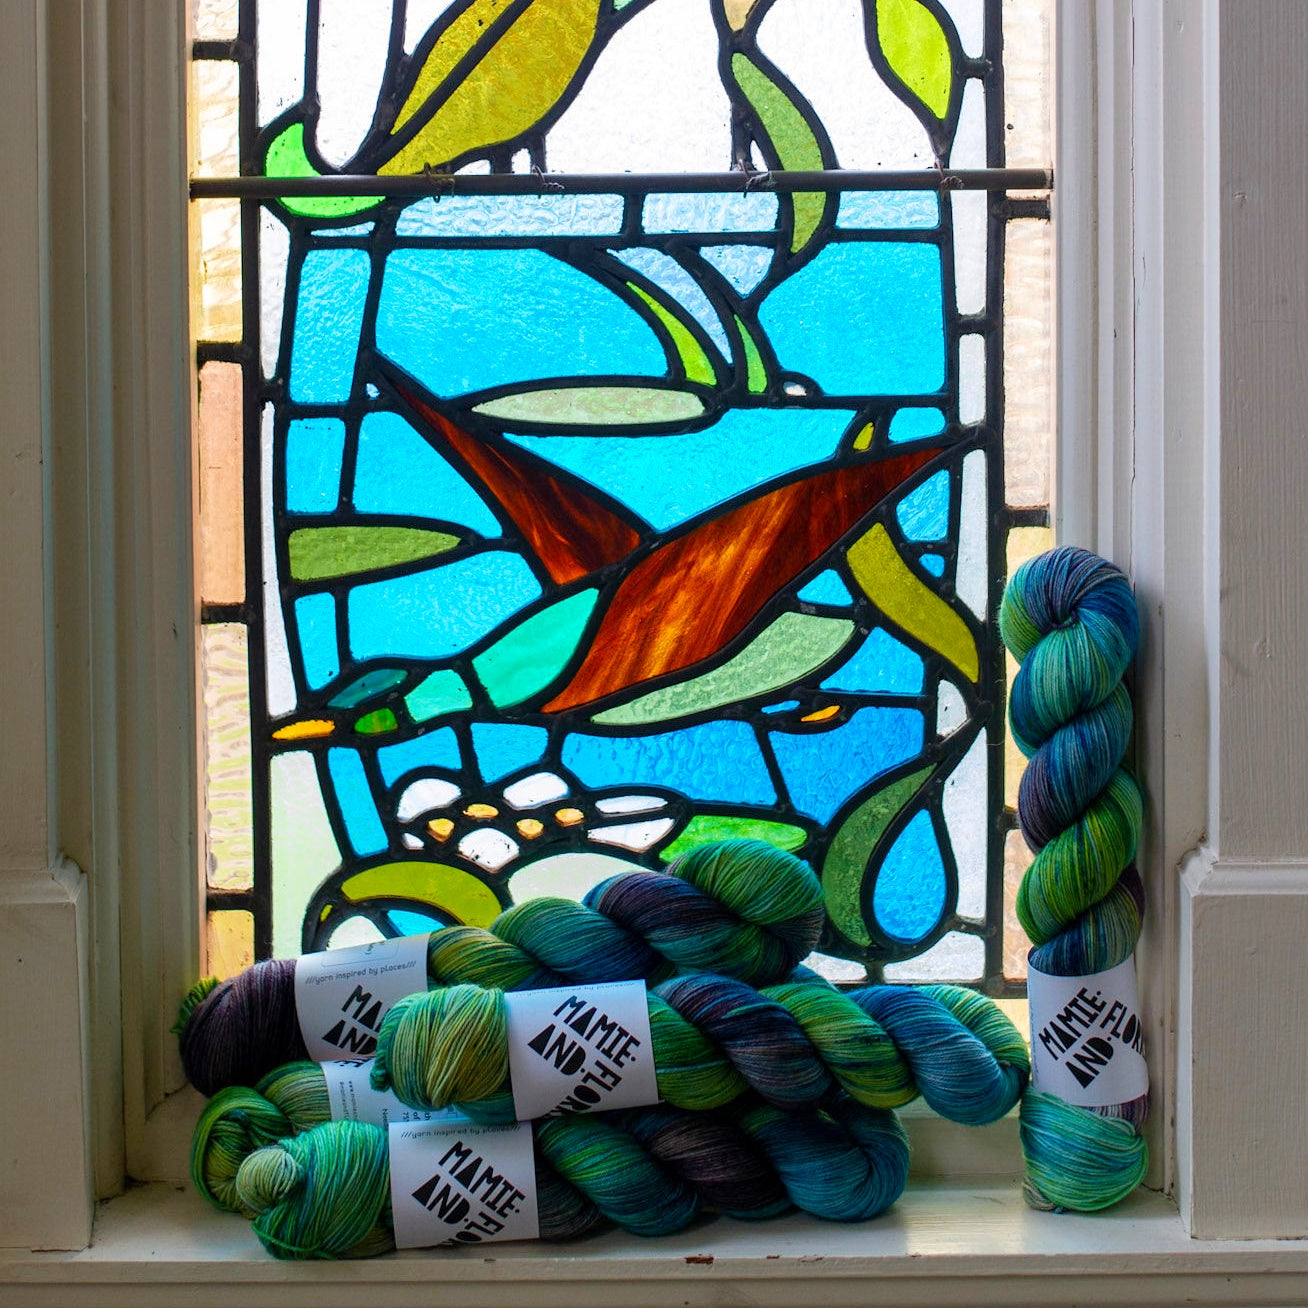 The Ducks Stained Glass, Victoria Baths - Merino Sock